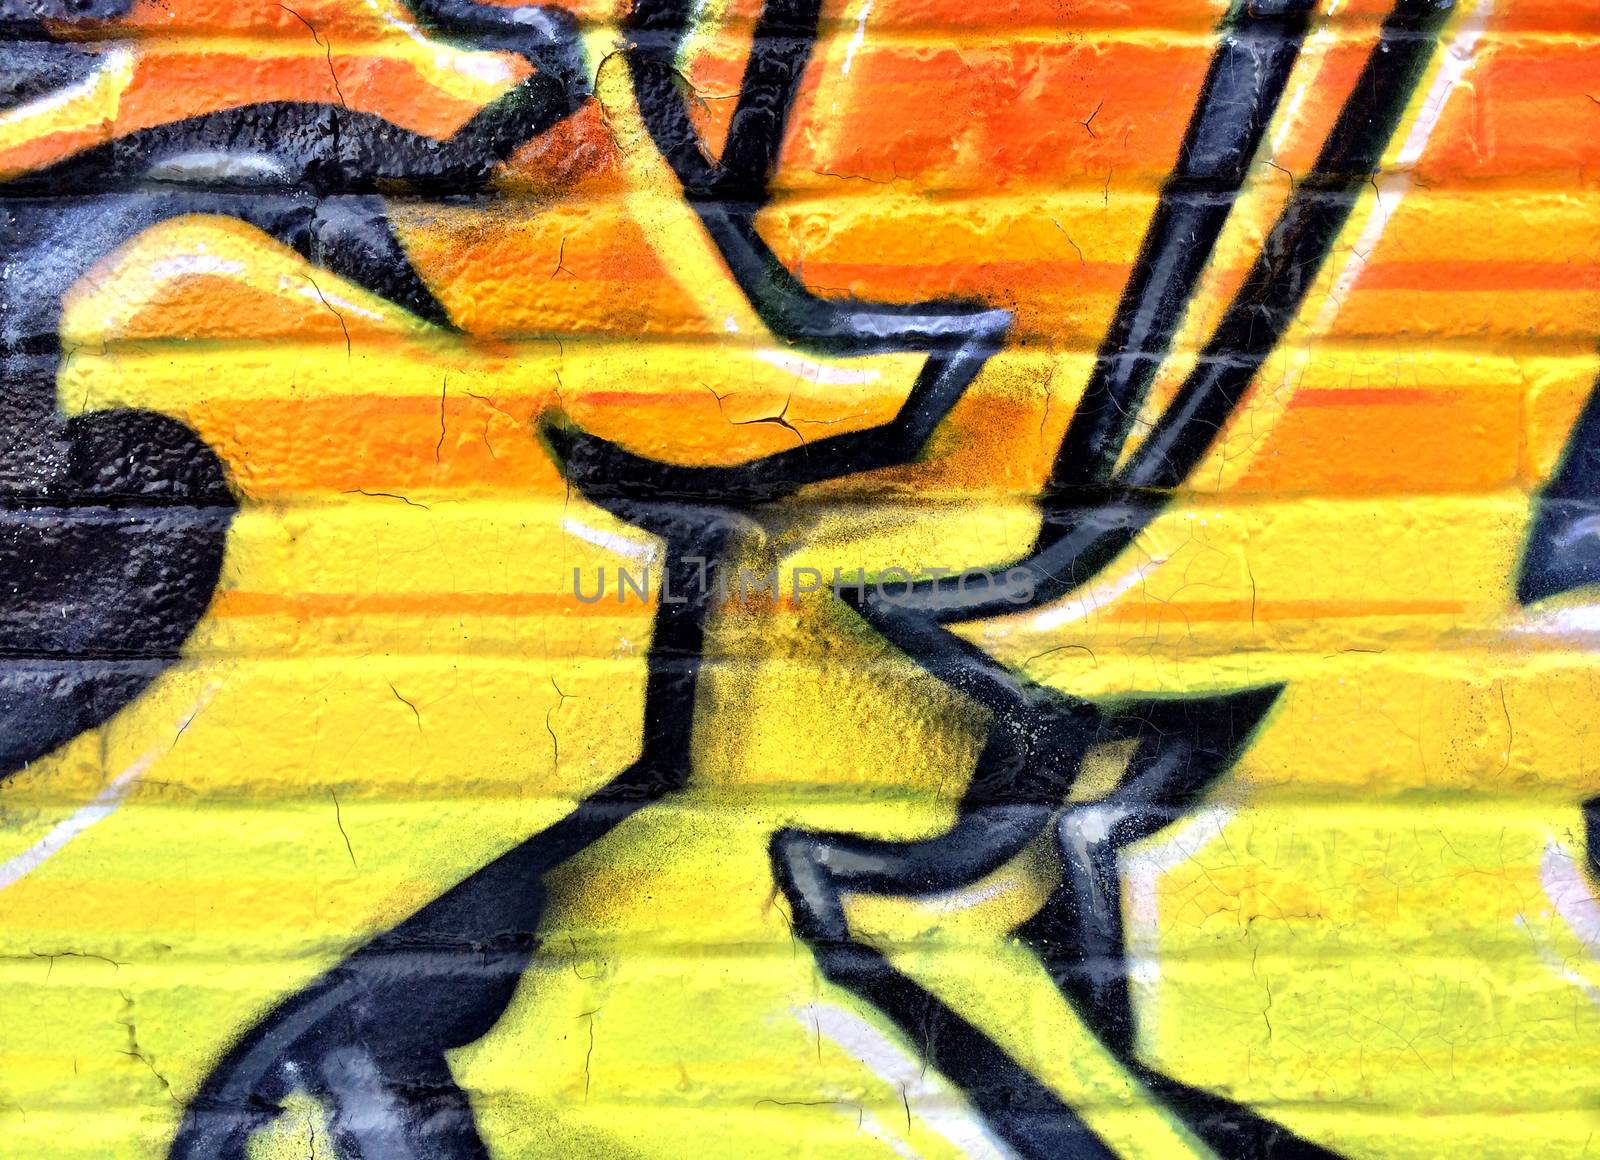 Black and yellow graffiti detail on a brick wall by anikasalsera